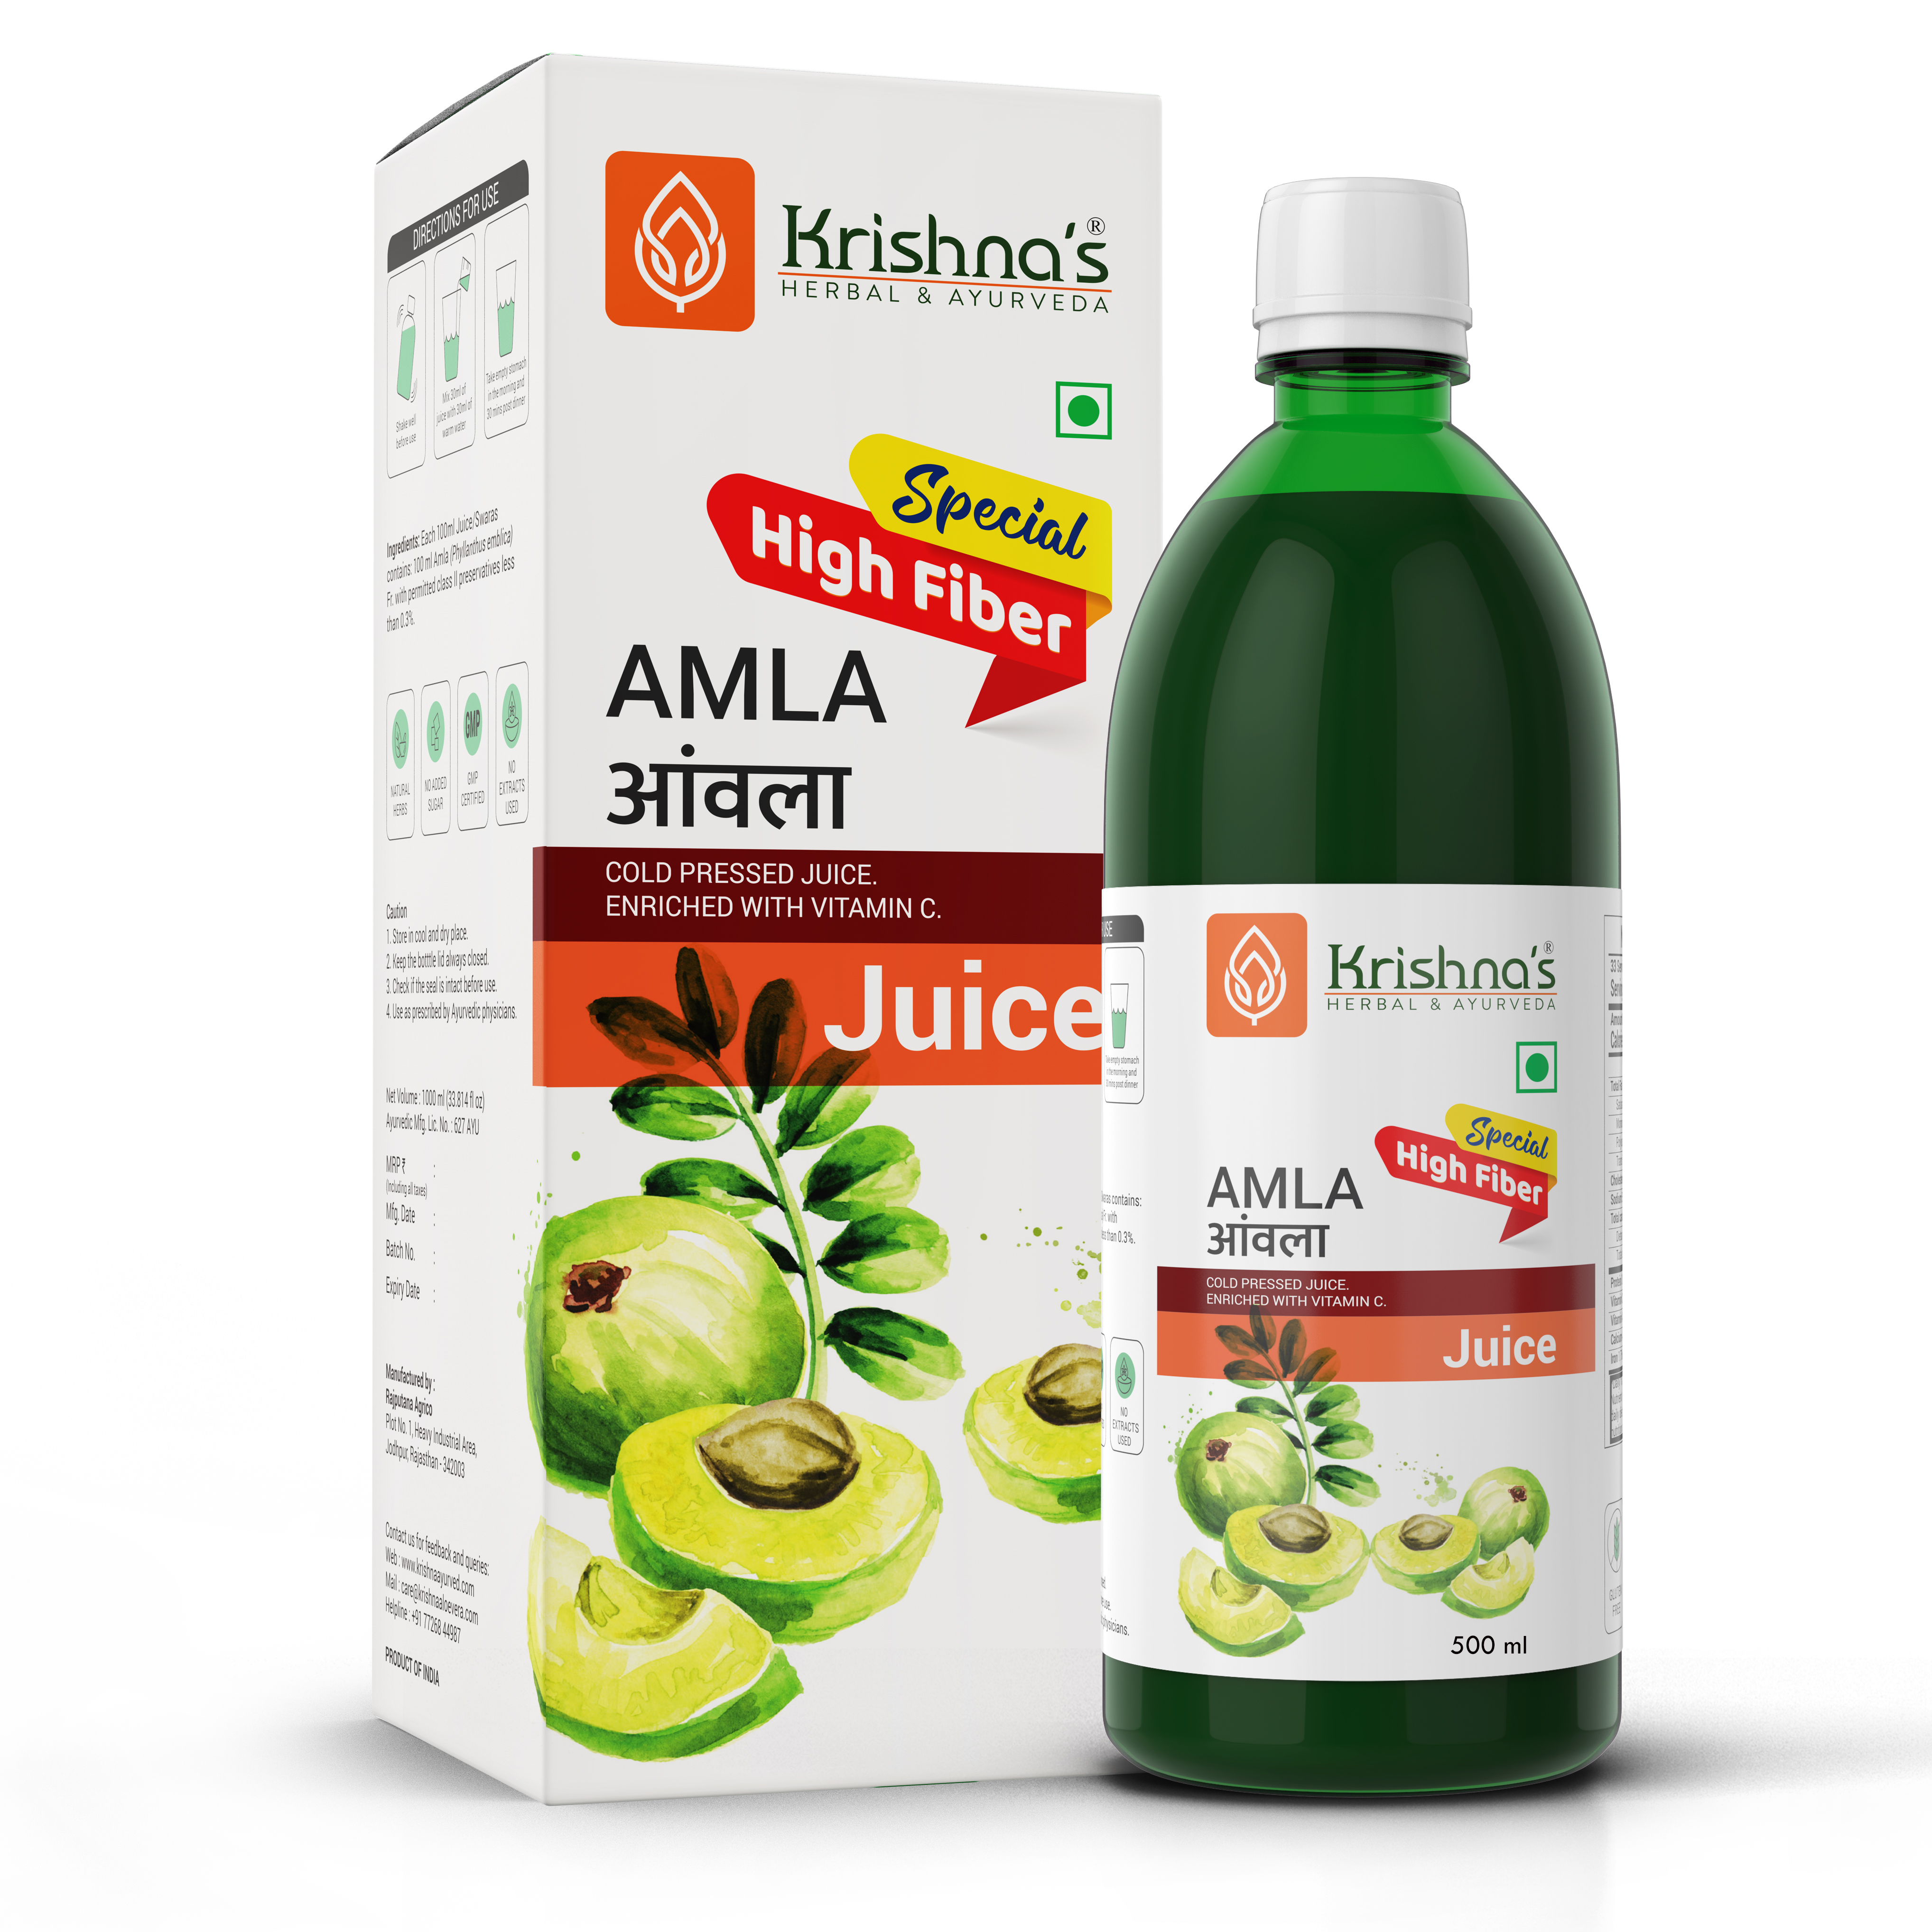 Krishna herbal Amla High Fiber Juice